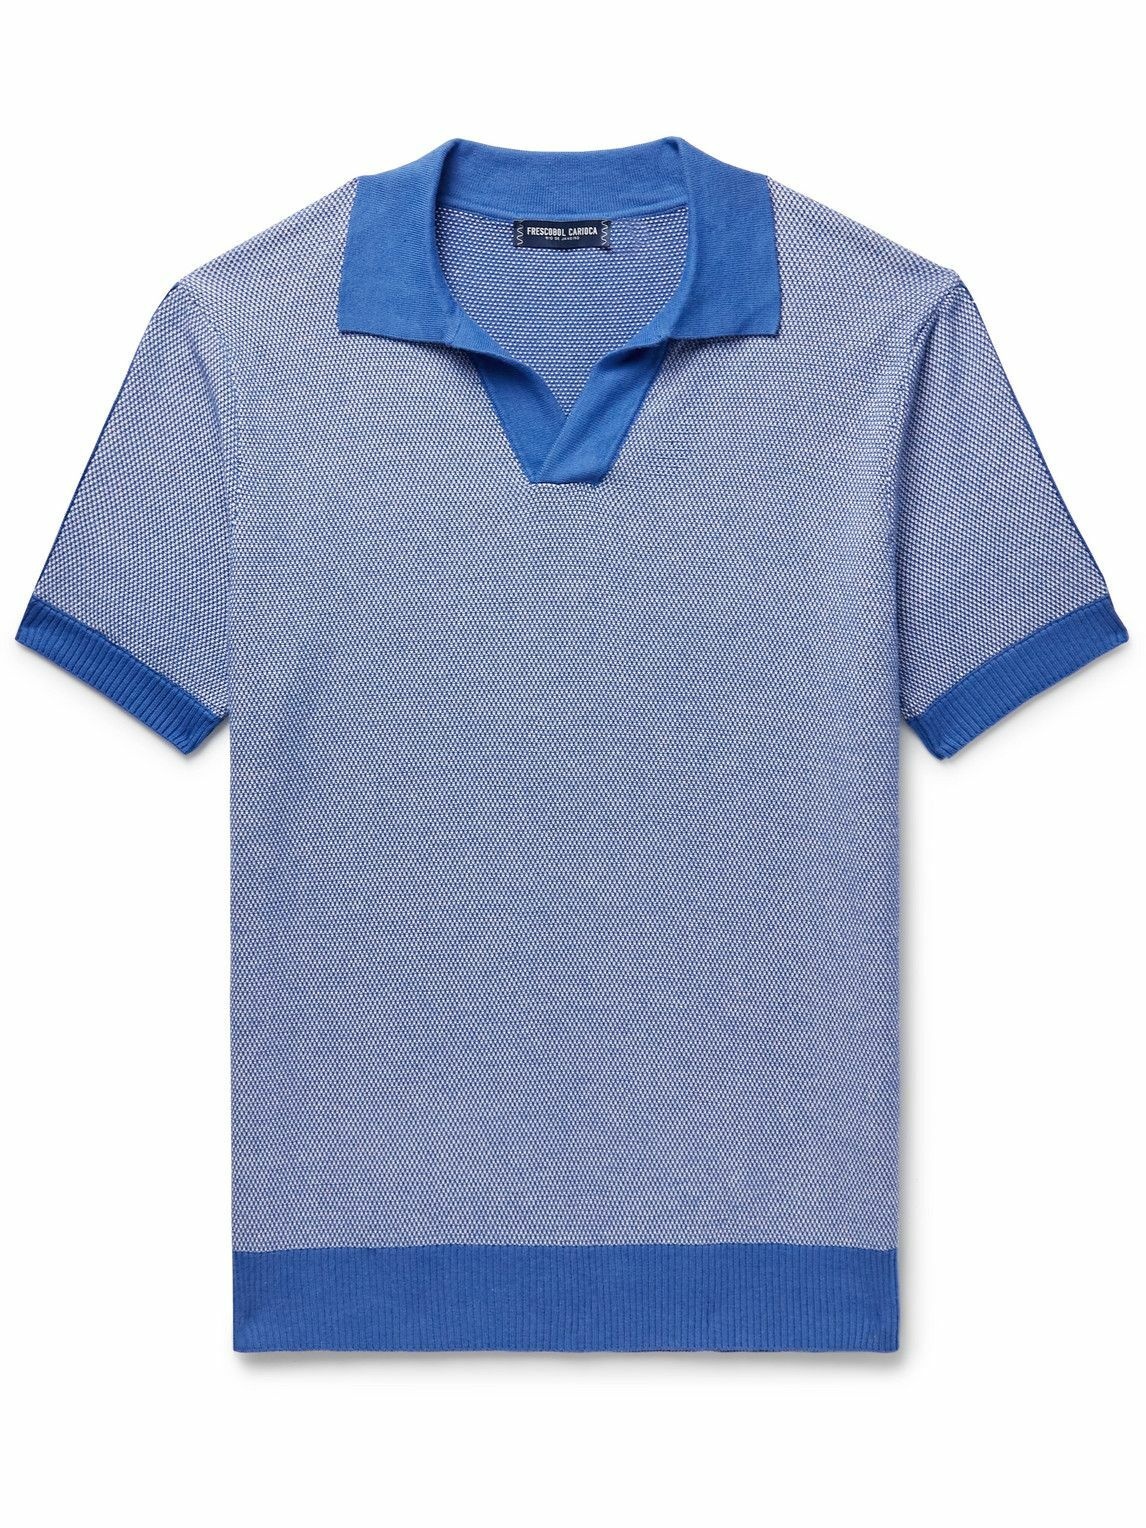 Frescobol Carioca - Rino Birdseye Cotton and Silk-Blend Polo Shirt - Blue  Frescobol Carioca